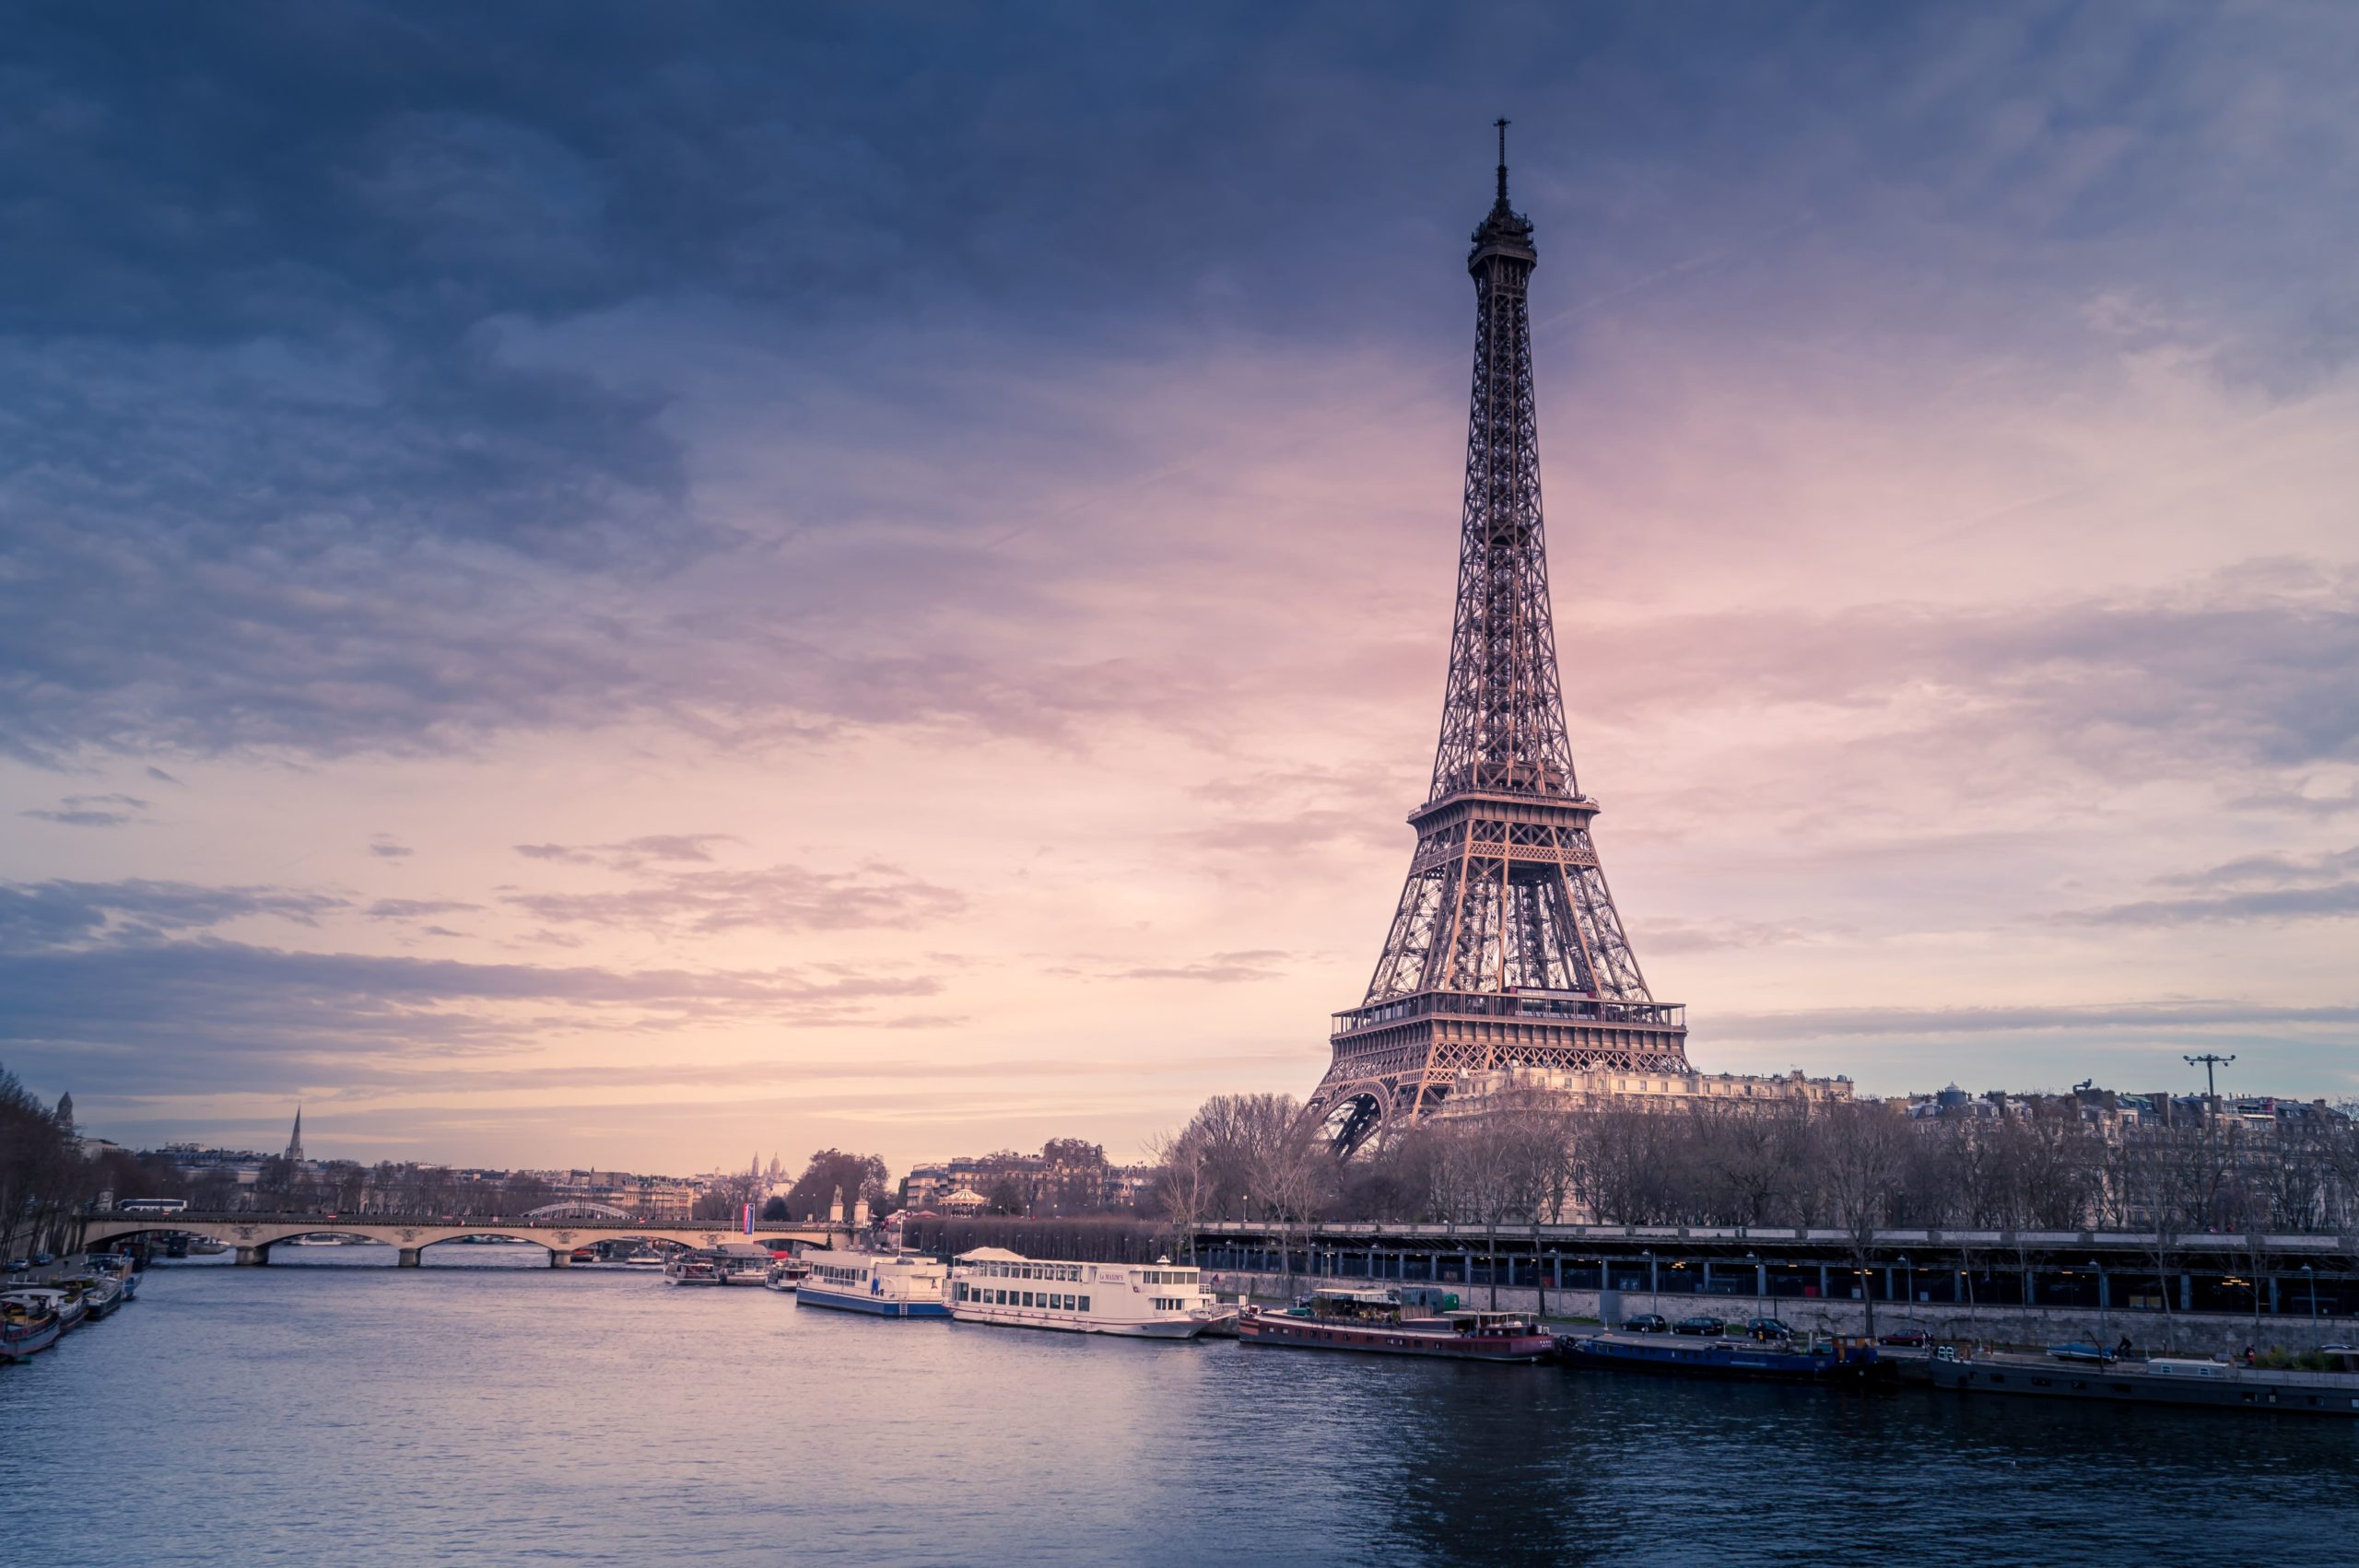 na Eiffelovu věž se vztahuje svoboda panoramatu